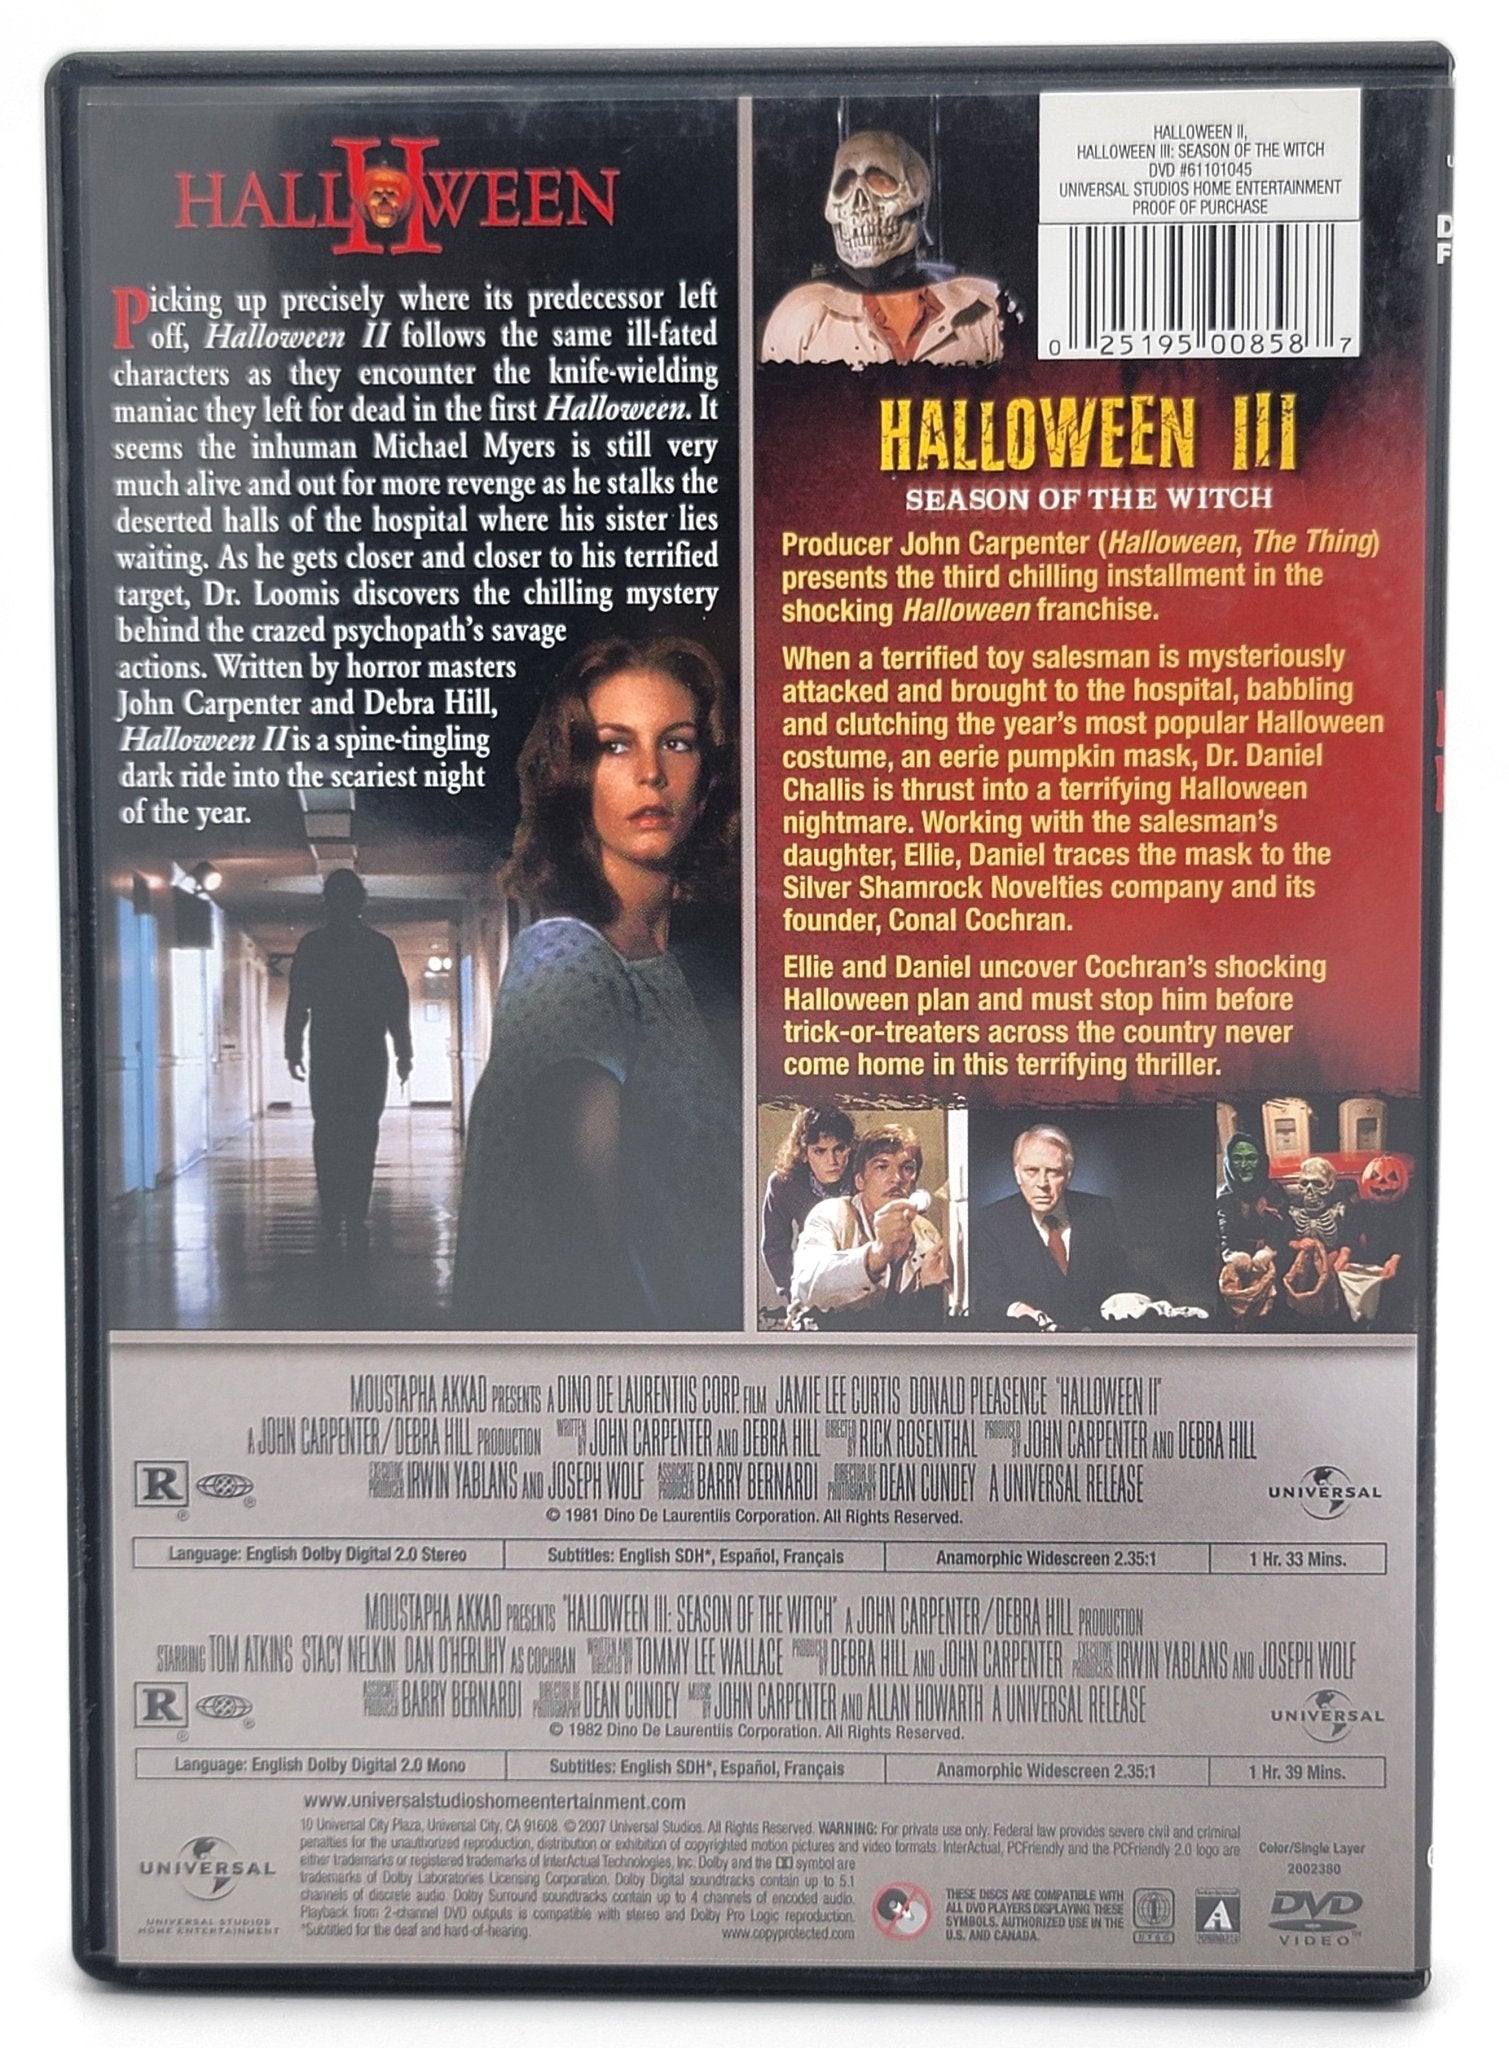 Universal Studios Home Entertainment - Halloween II & Halloween III Season of the Witch - Double Feature | DVD | 2 Disc Set - DVD - Steady Bunny Shop